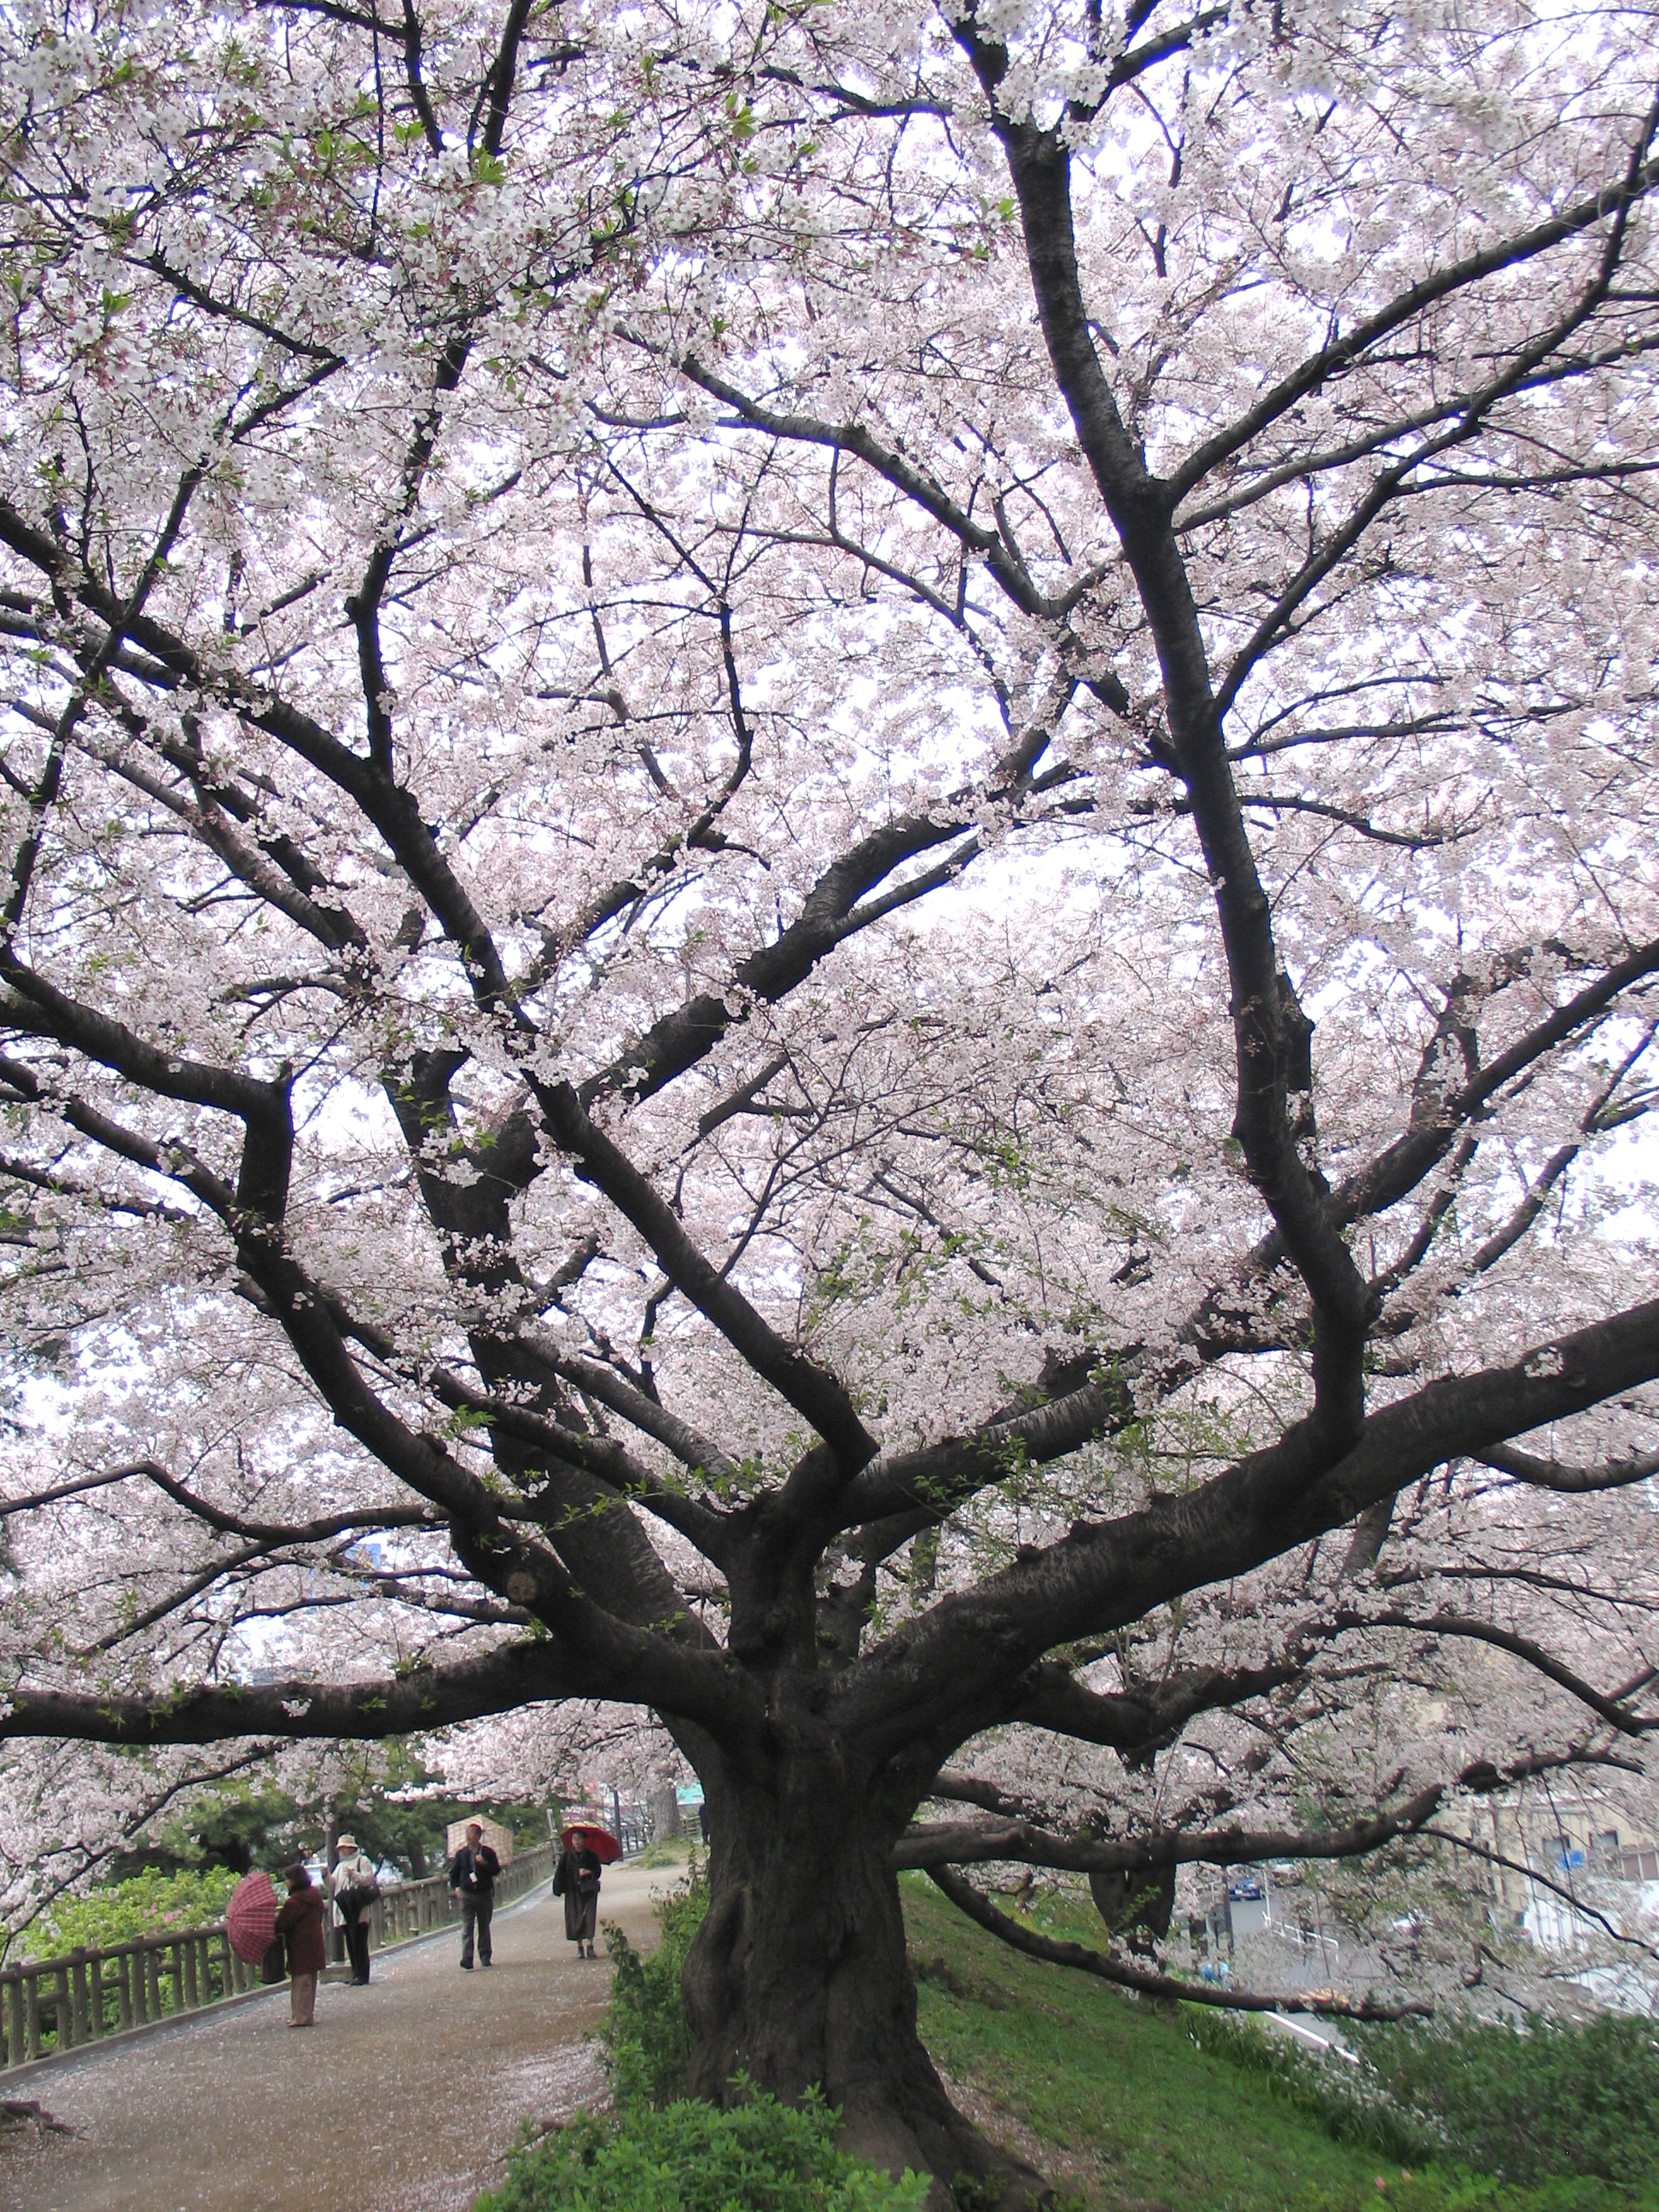 Sakura is the Japanese cherry